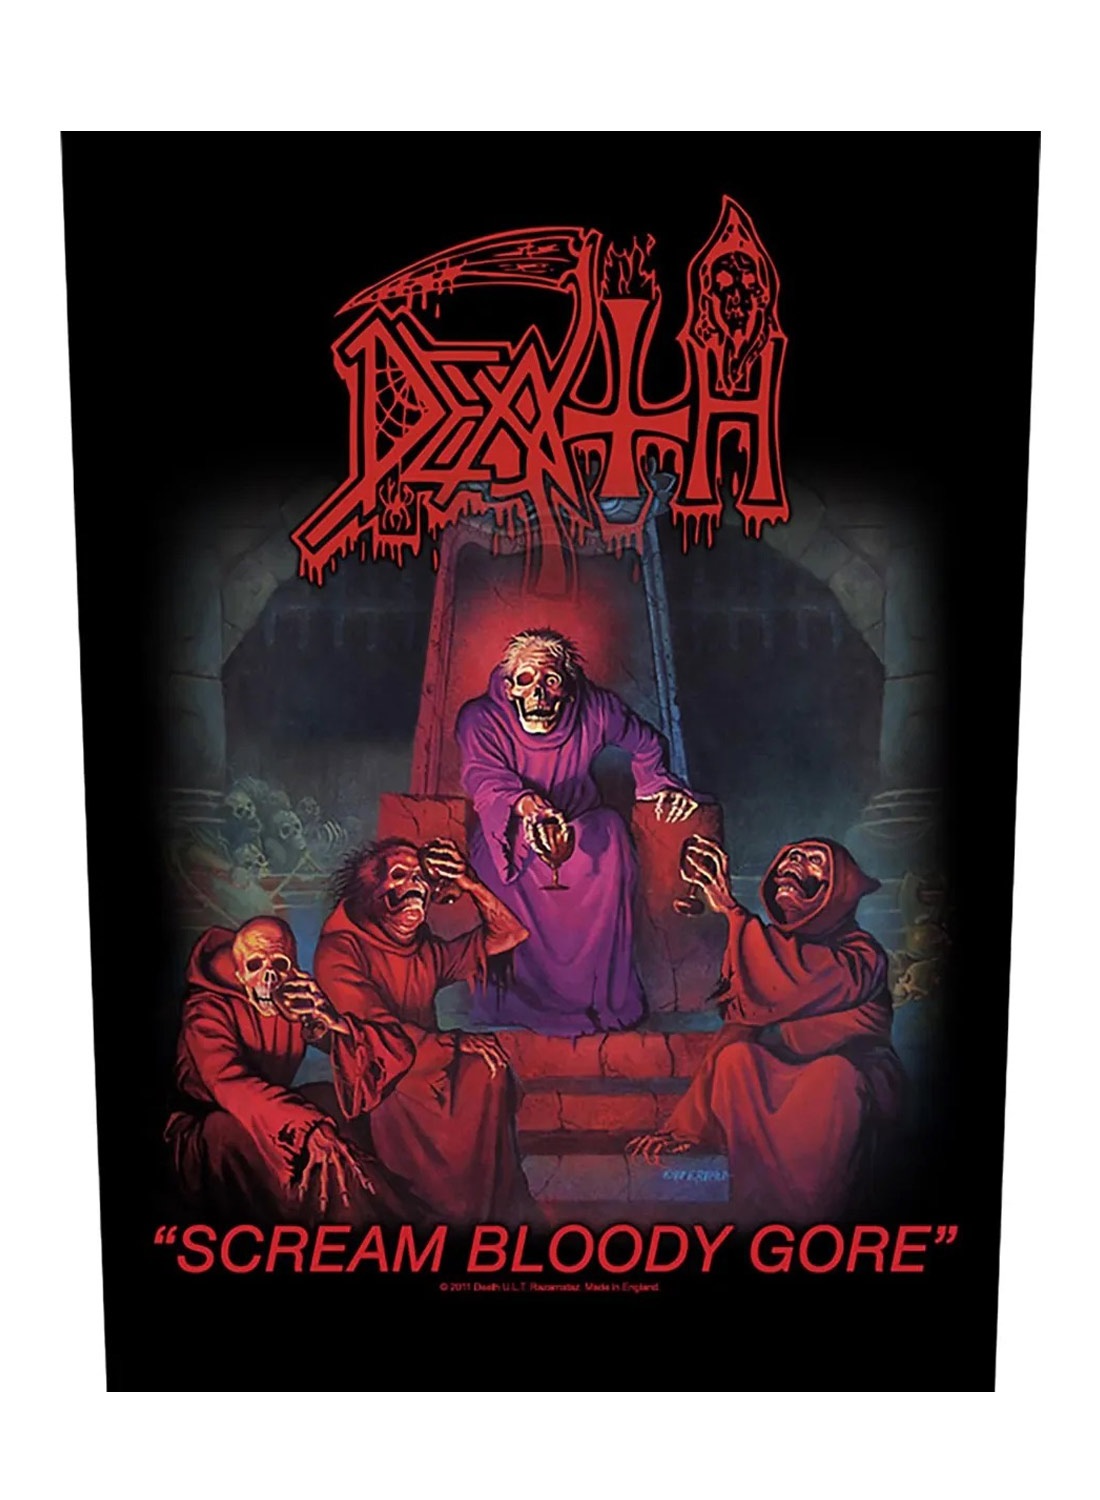 Death Scream Bloody Gore Back Patch